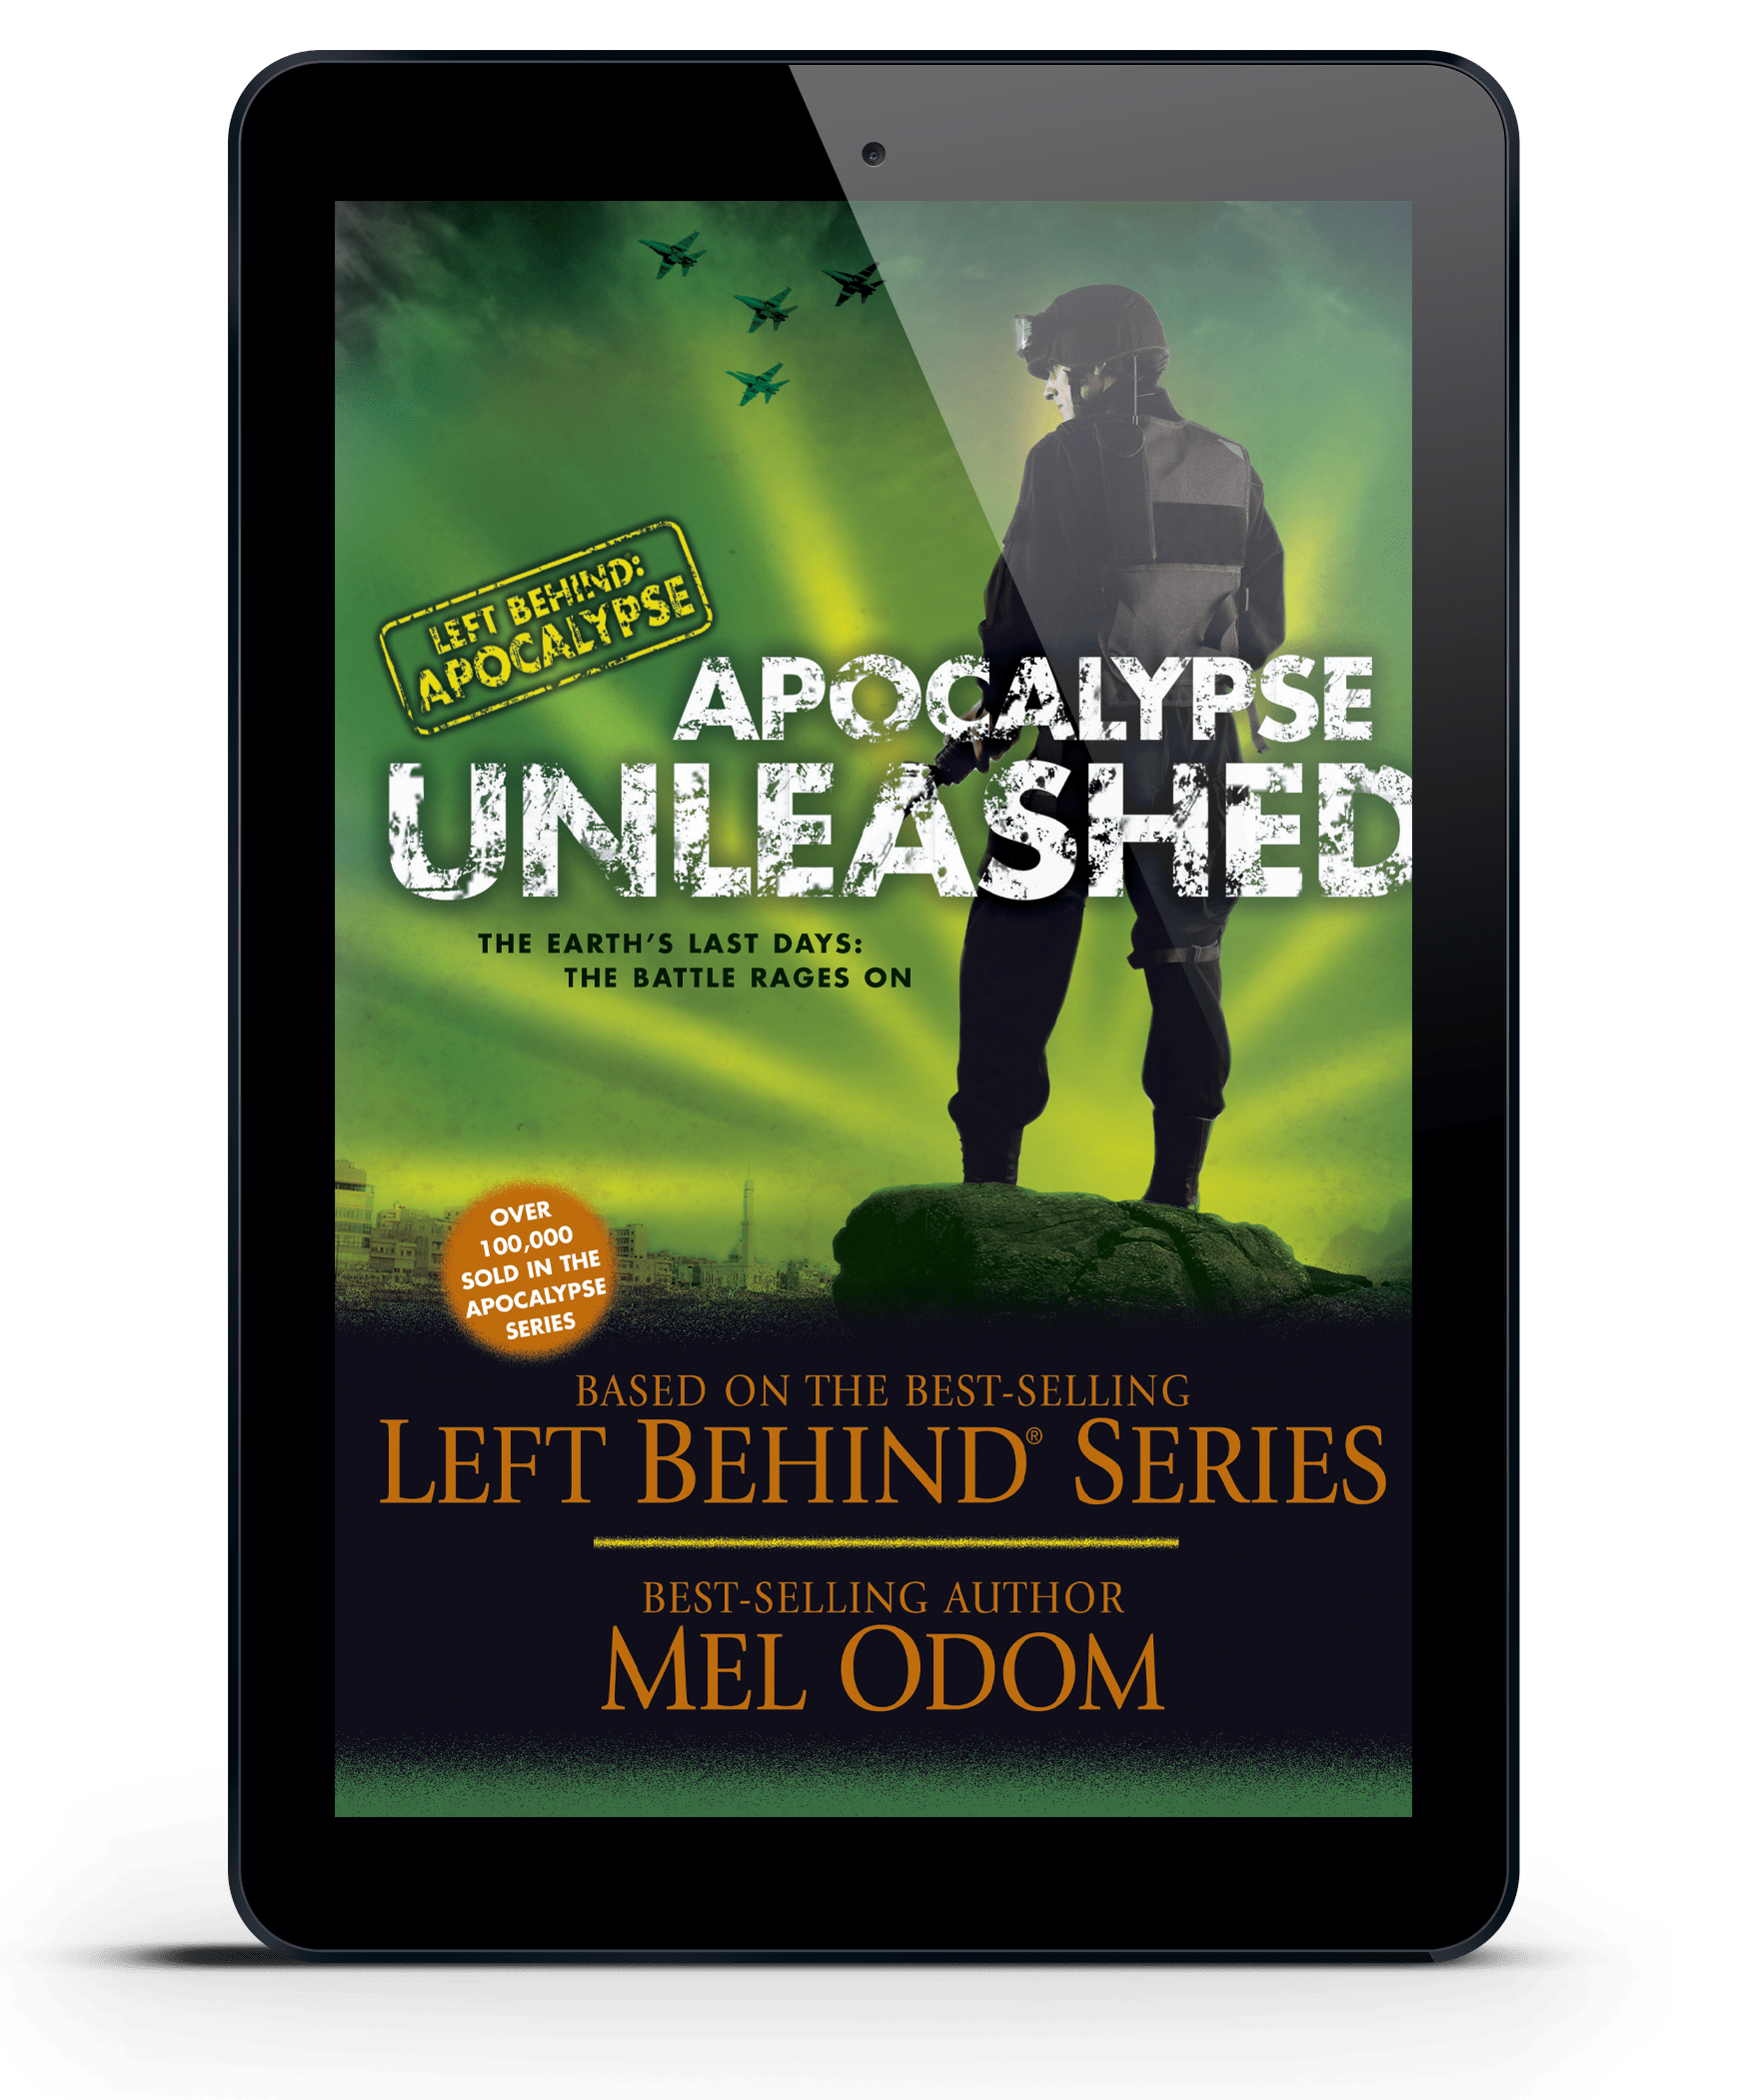 Left Behind: Apocalypse, book 4